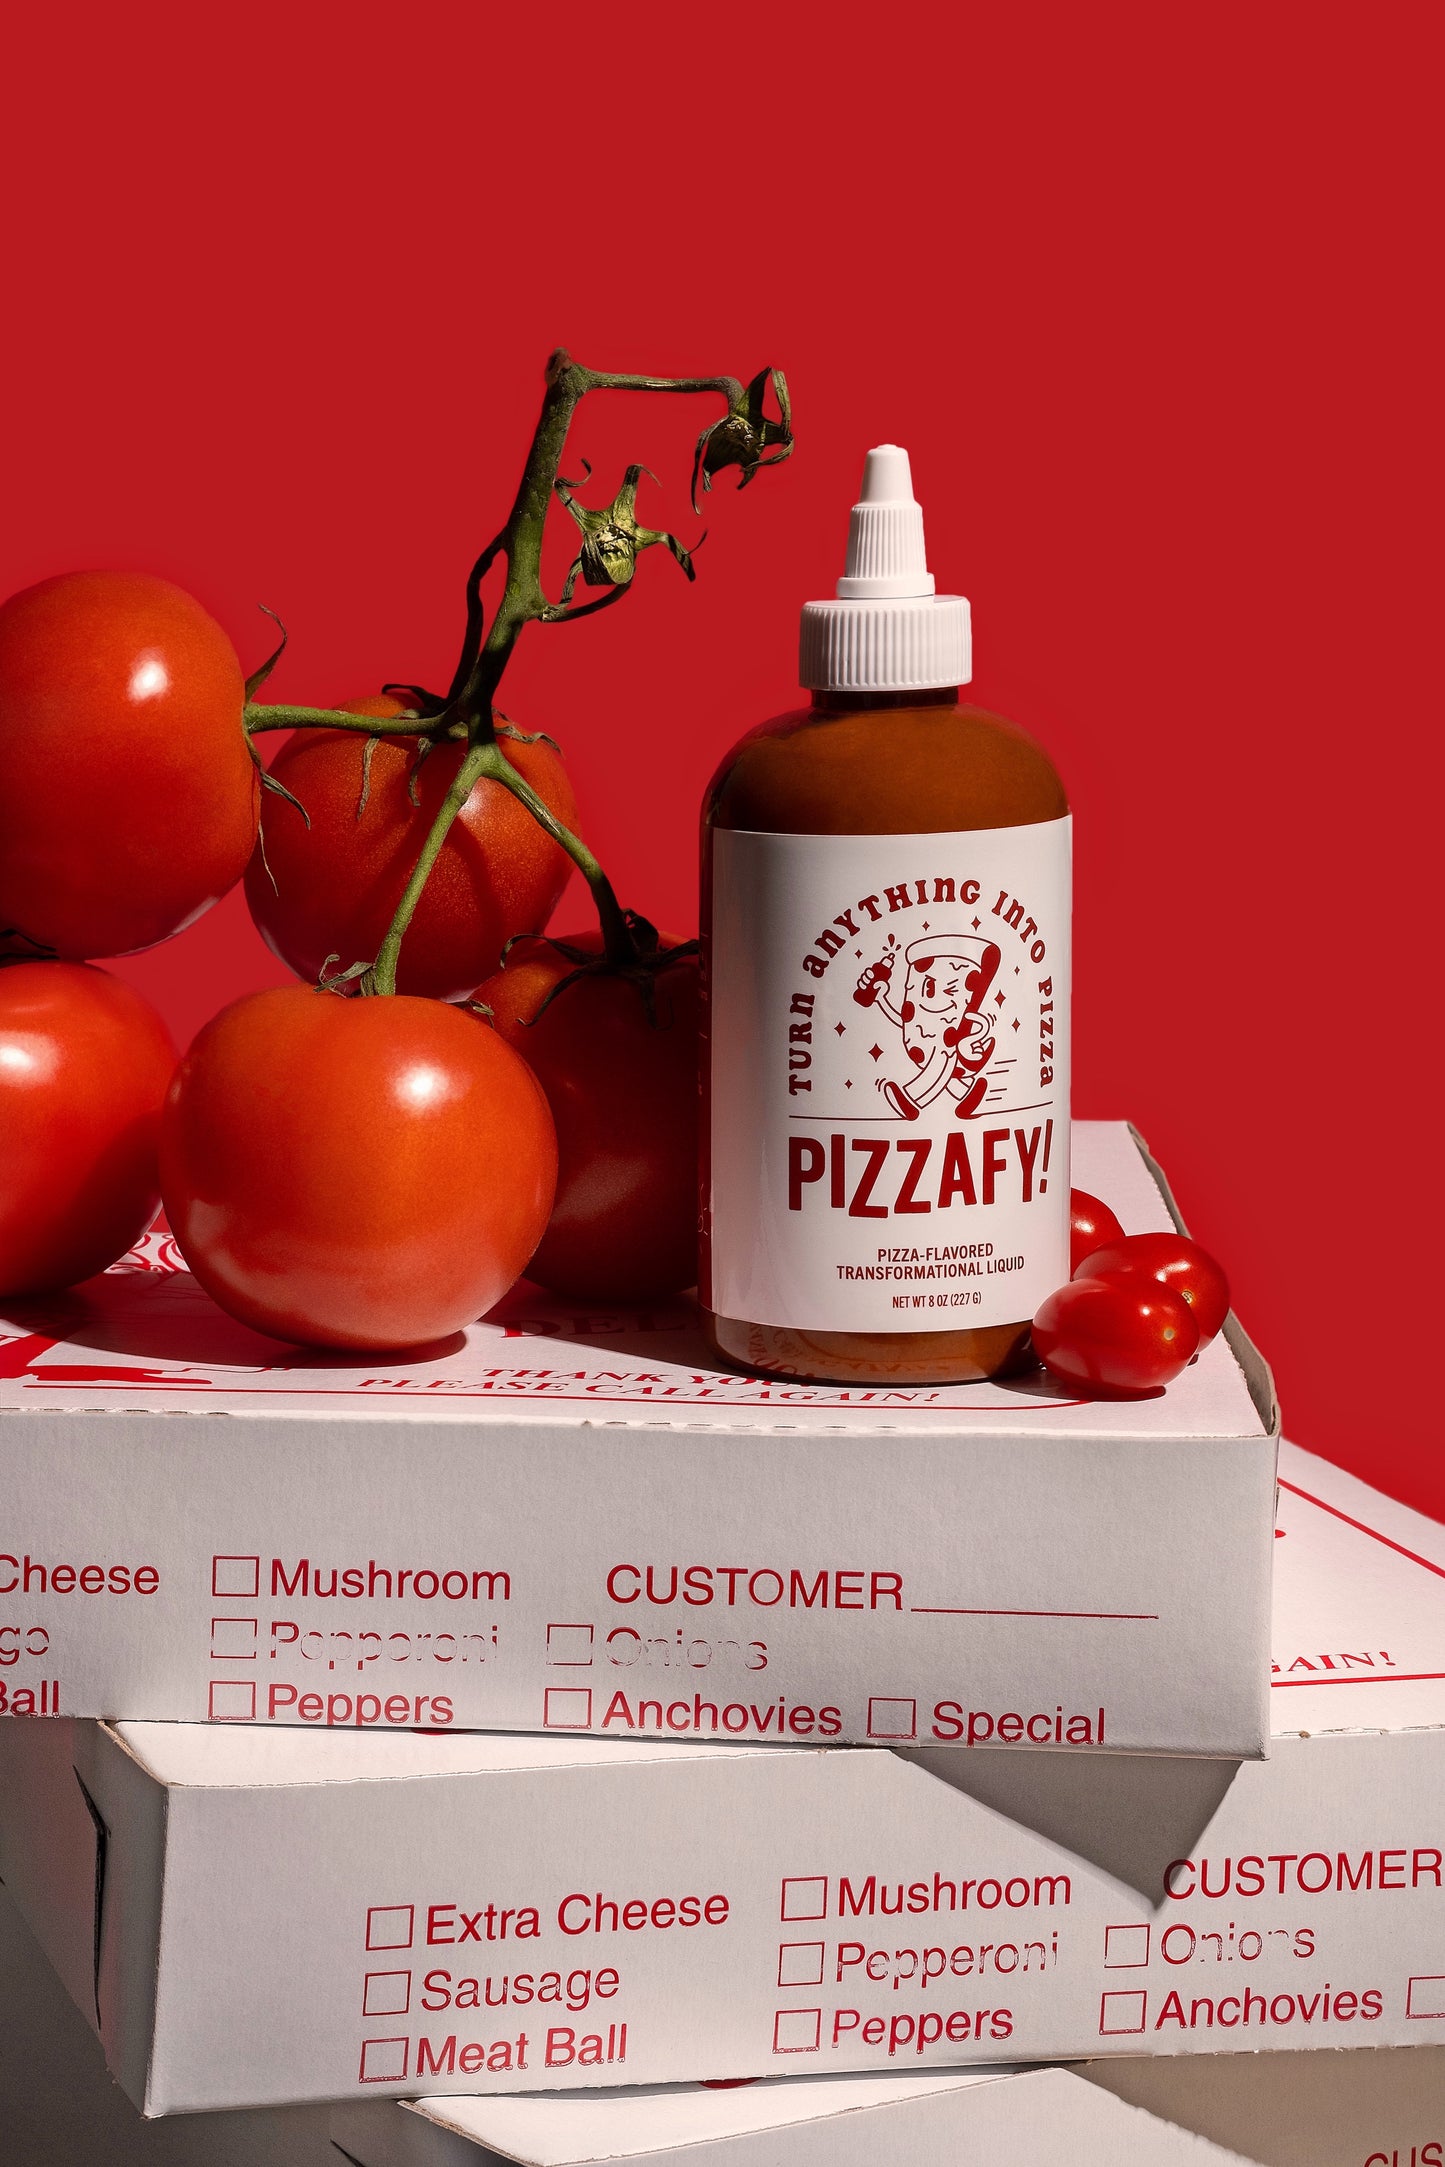 Pizzafy Bottle 2-pack